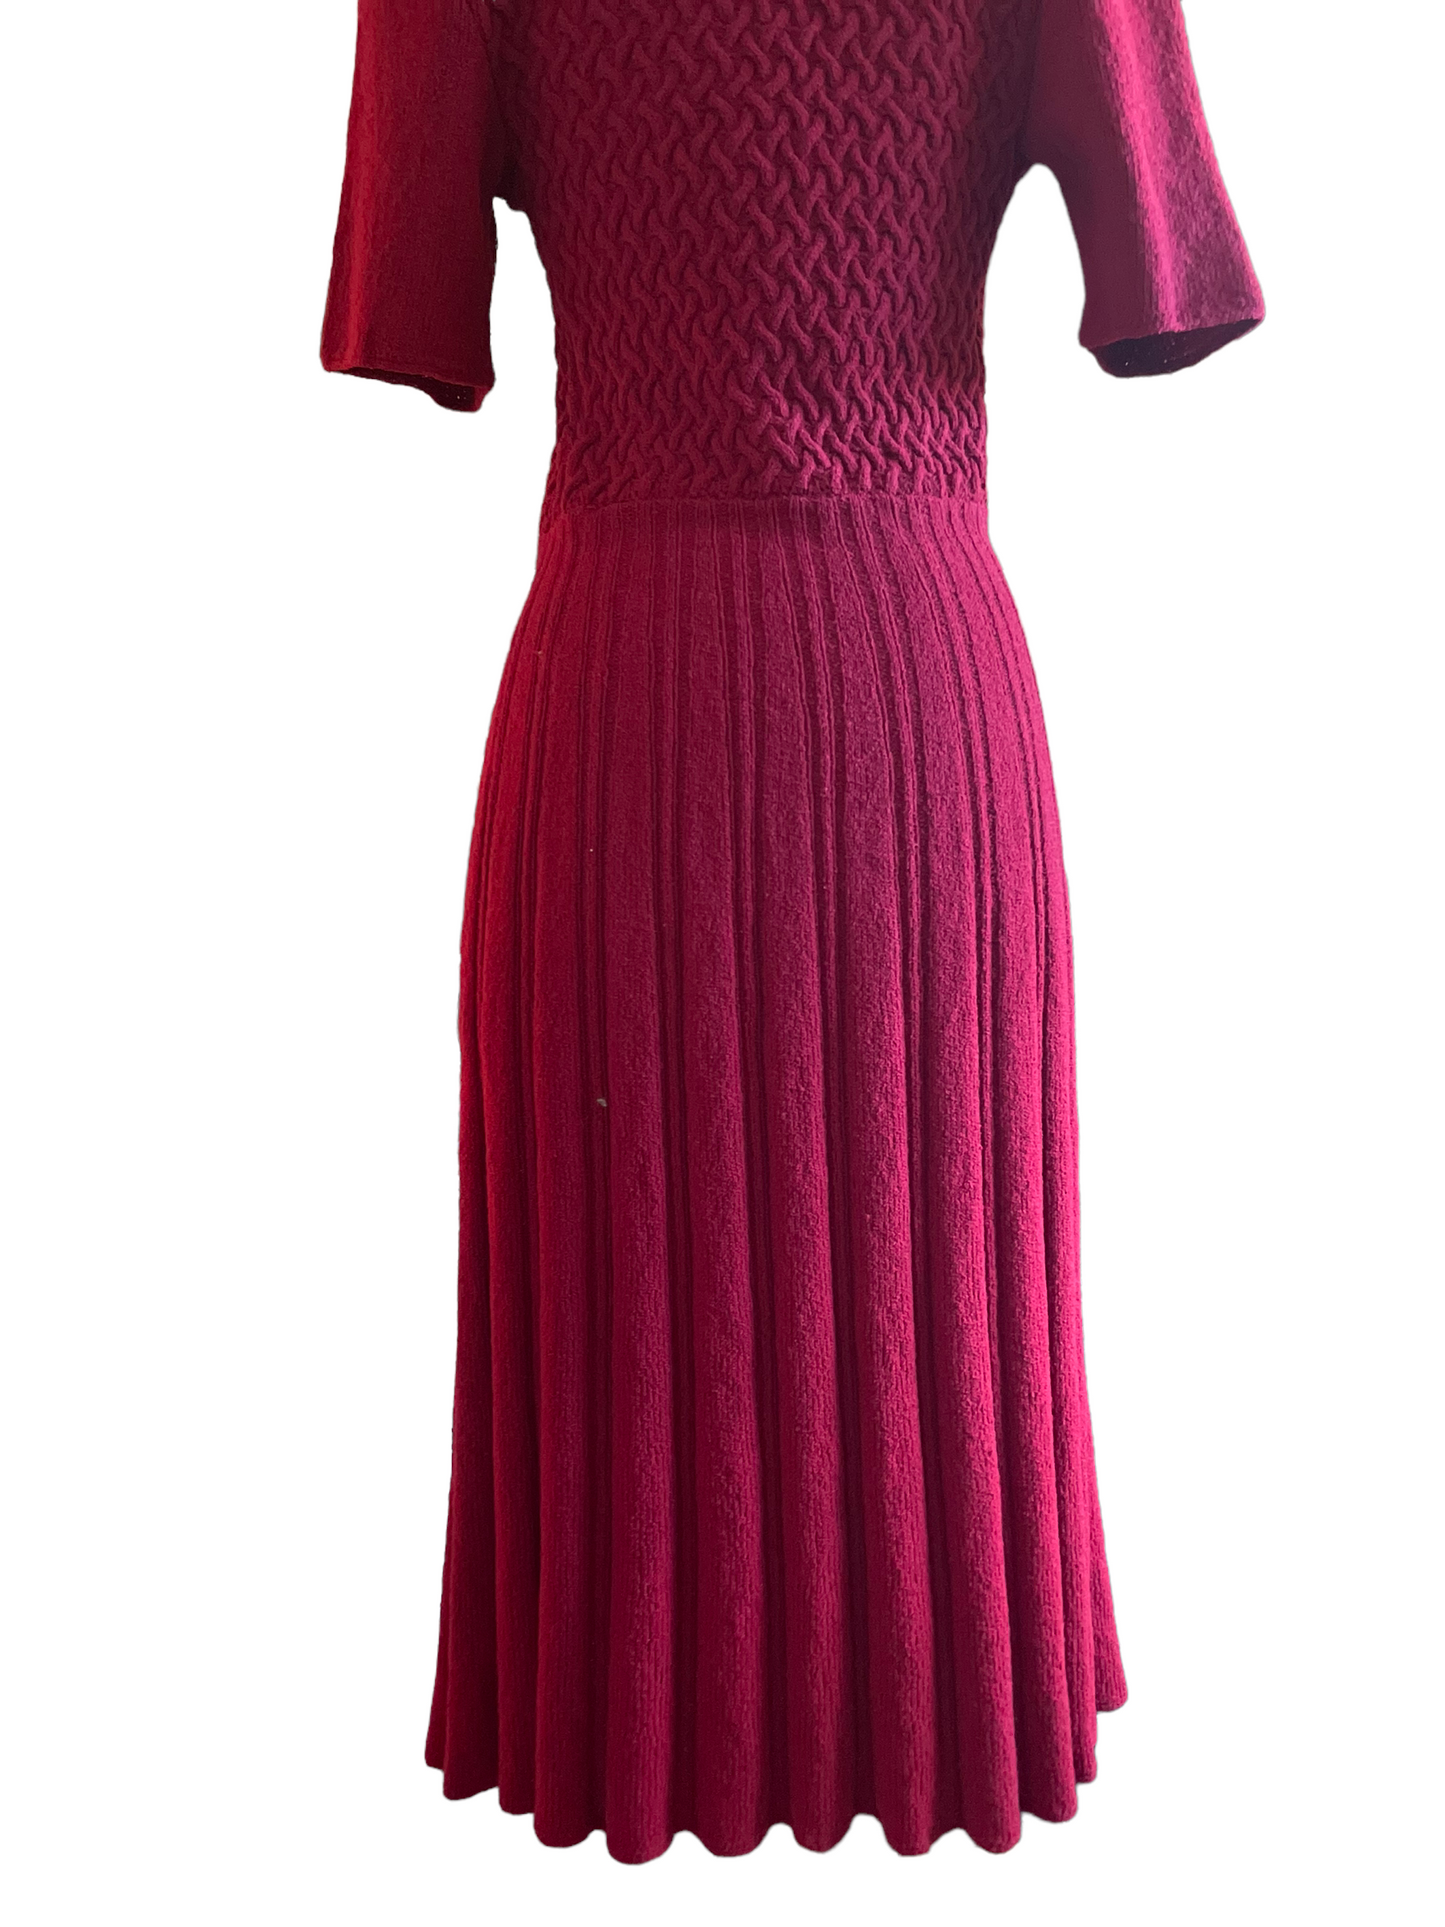 Vintage 1940s Hand-Knit Red Dress SZ S |  Barn Owl Vintage | Seattle Vintage Dresses Lower back view.